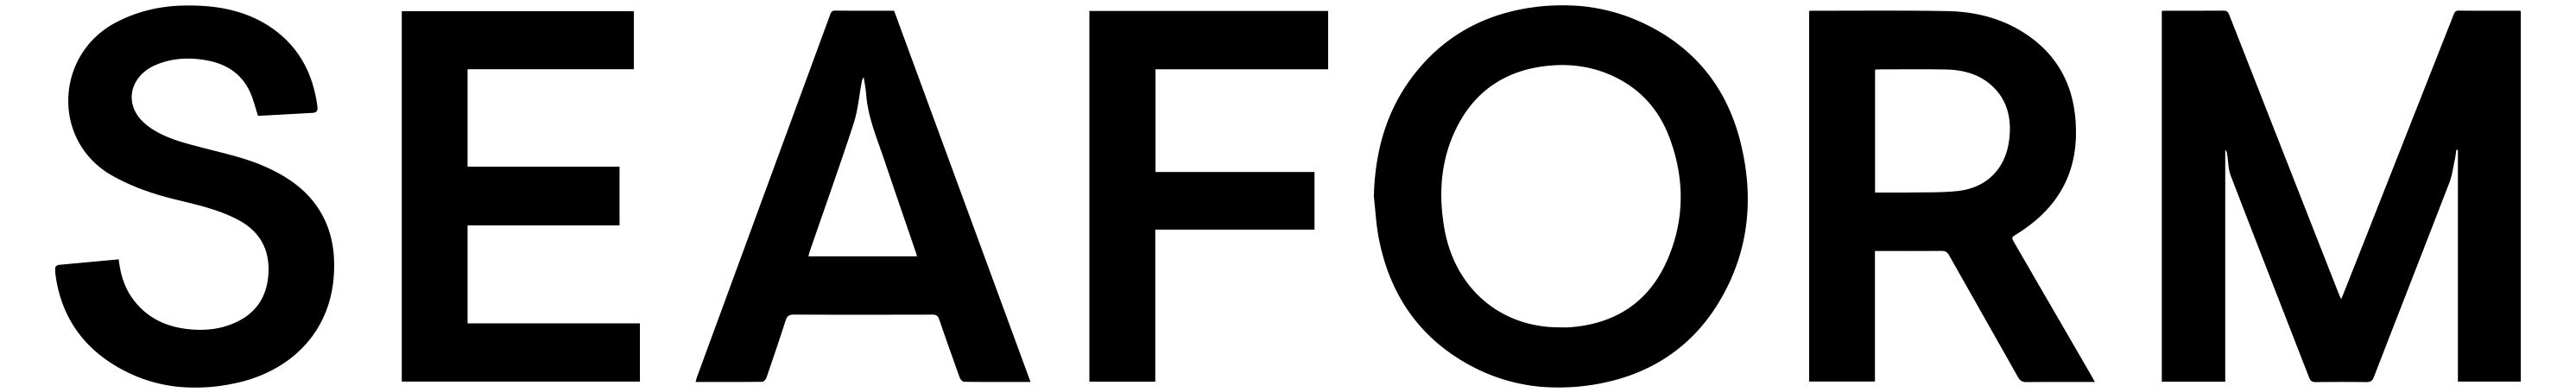 seaform header logo